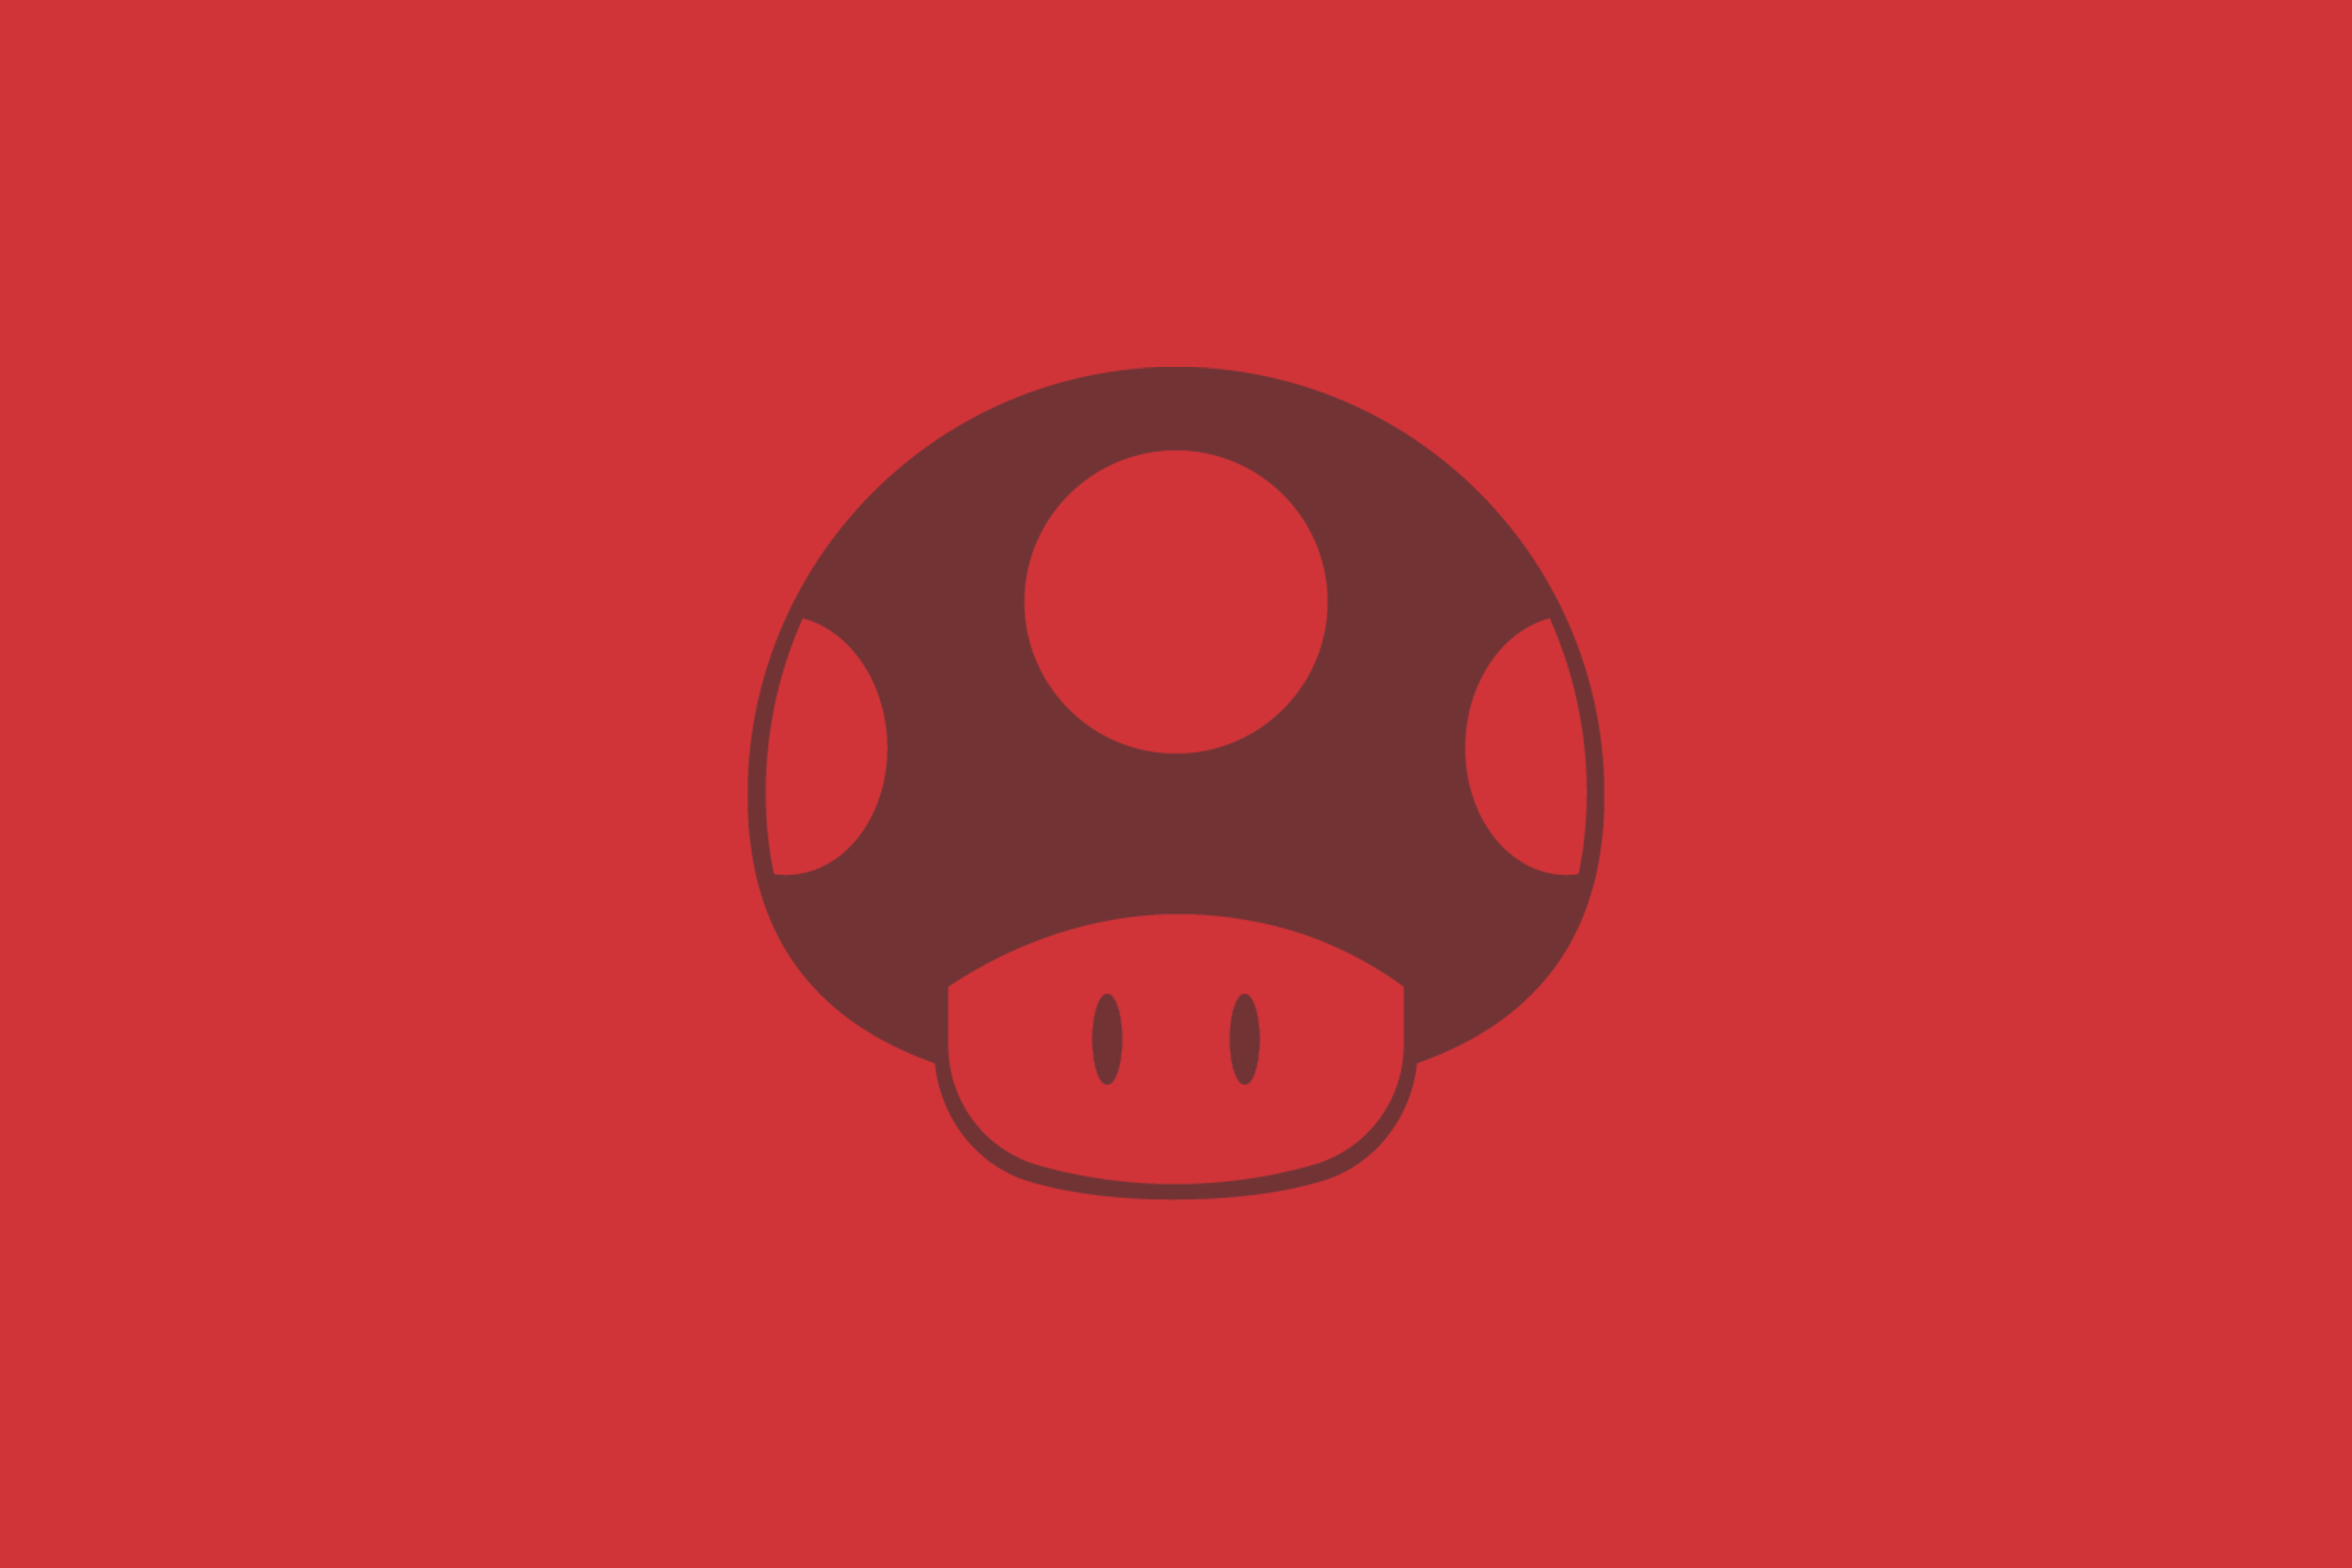 General 3000x2000 Super Mario Toad (character) mushroom minimalism digital art red red background